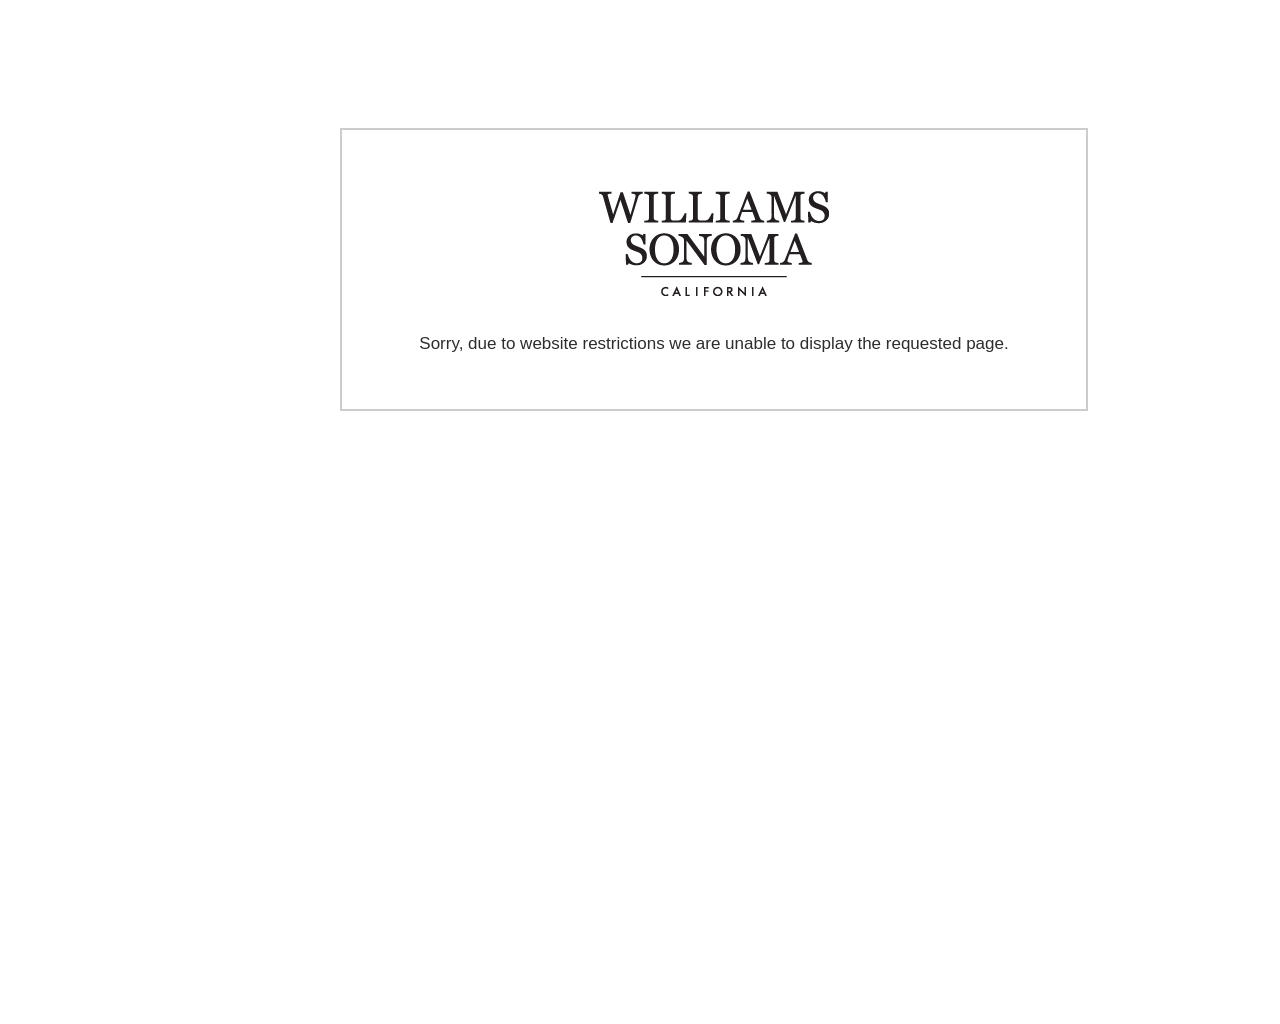 www.williams-sonoma.com